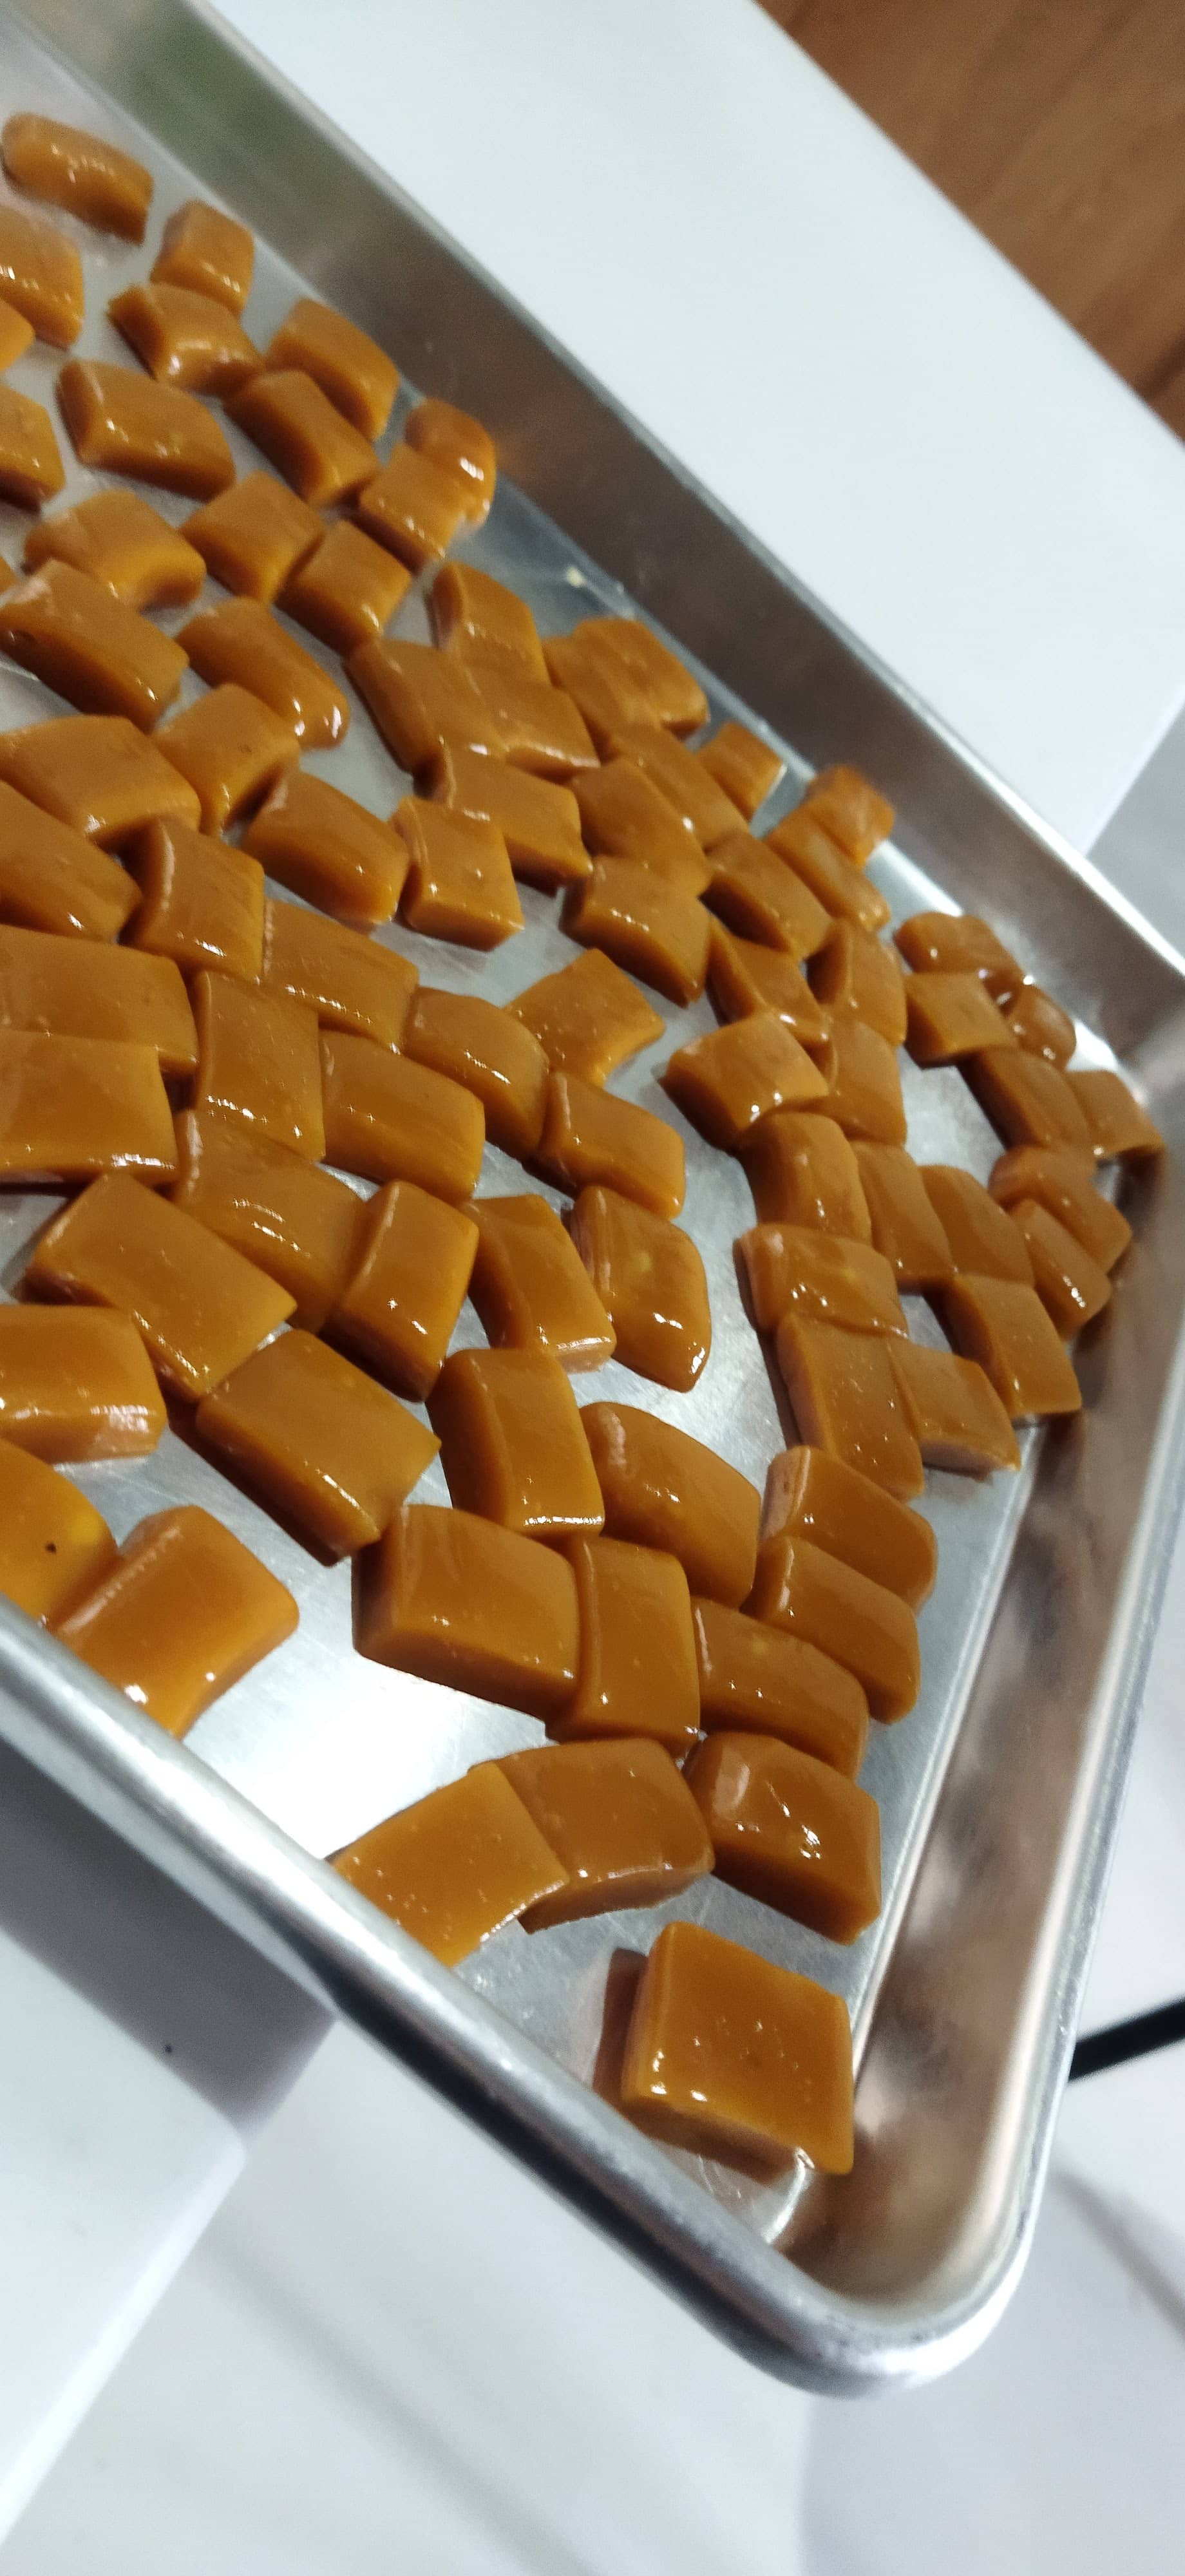 Caramelos de maracuyá y yacón x 400 Gr /100 Und apx.